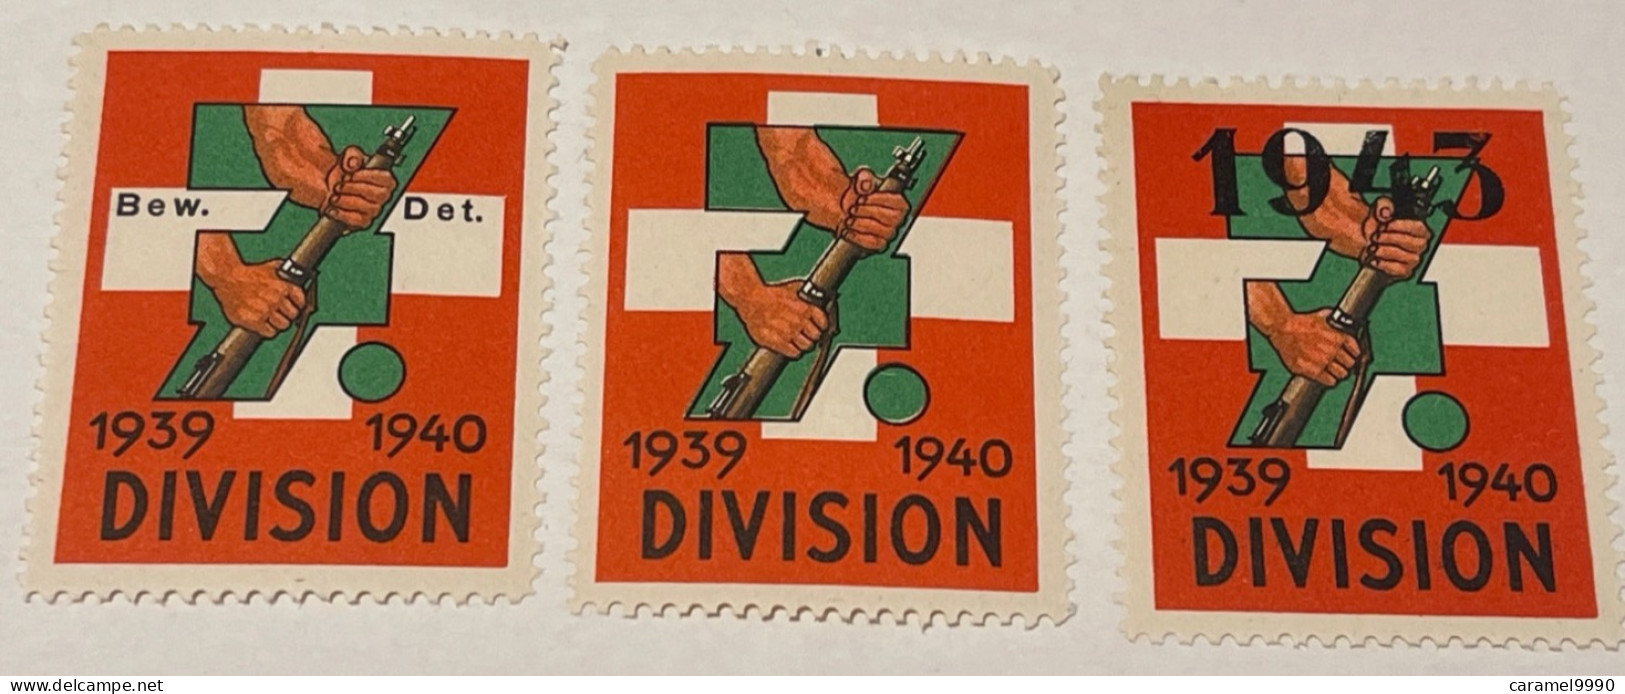 Schweiz Swiss Soldatenmarken 1939- 1940 Division Bew. Det. 1943 Z 26 - Vignetten